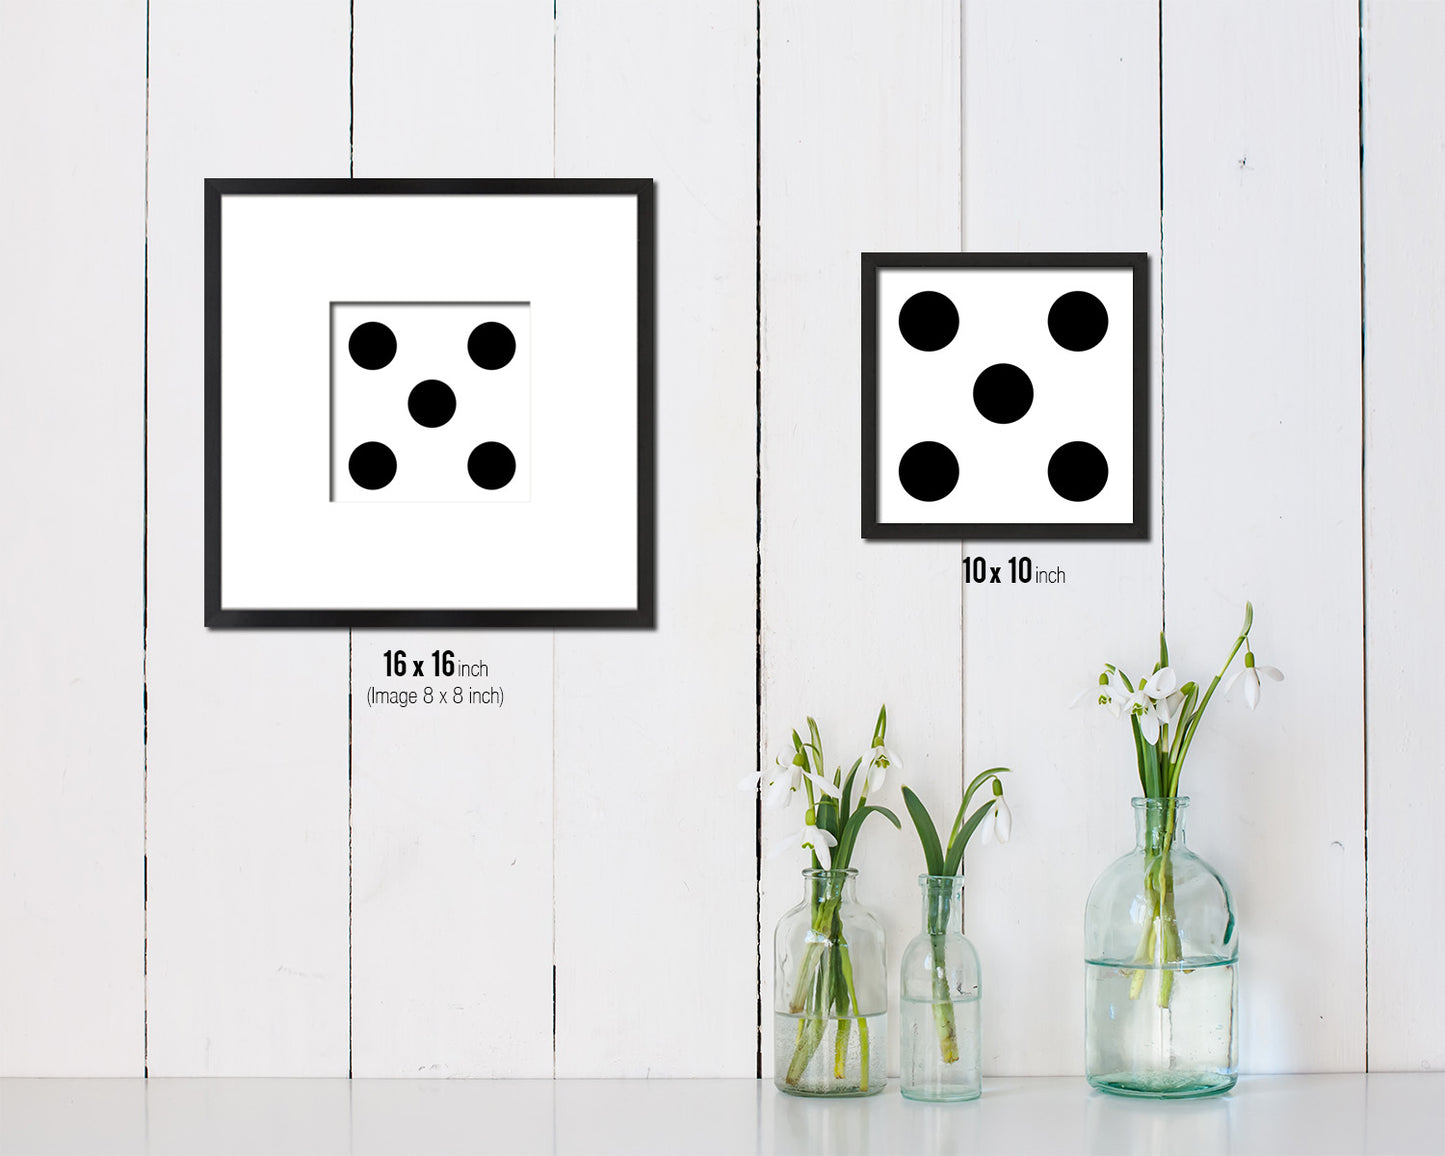 Dice 5 Punctuation Symbol Framed Print Home Decor Wall Art English Teacher Gifts